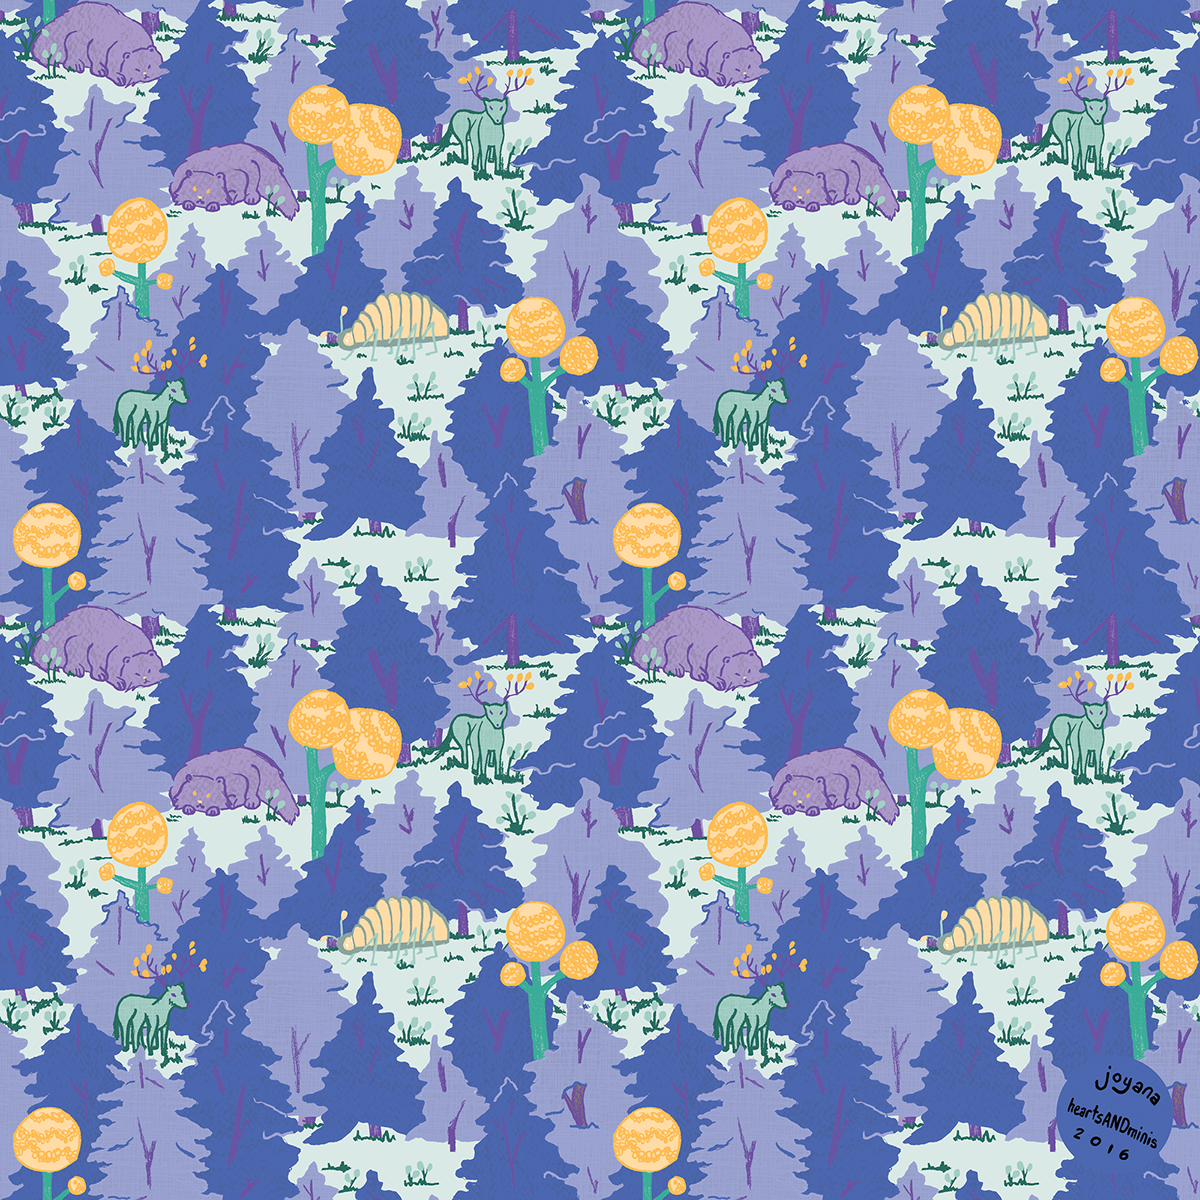 Adobe Portfolio fabric pattern design  Textiles fabric design textile design  ILLUSTRATION  forest patterns animal patters critter patterns